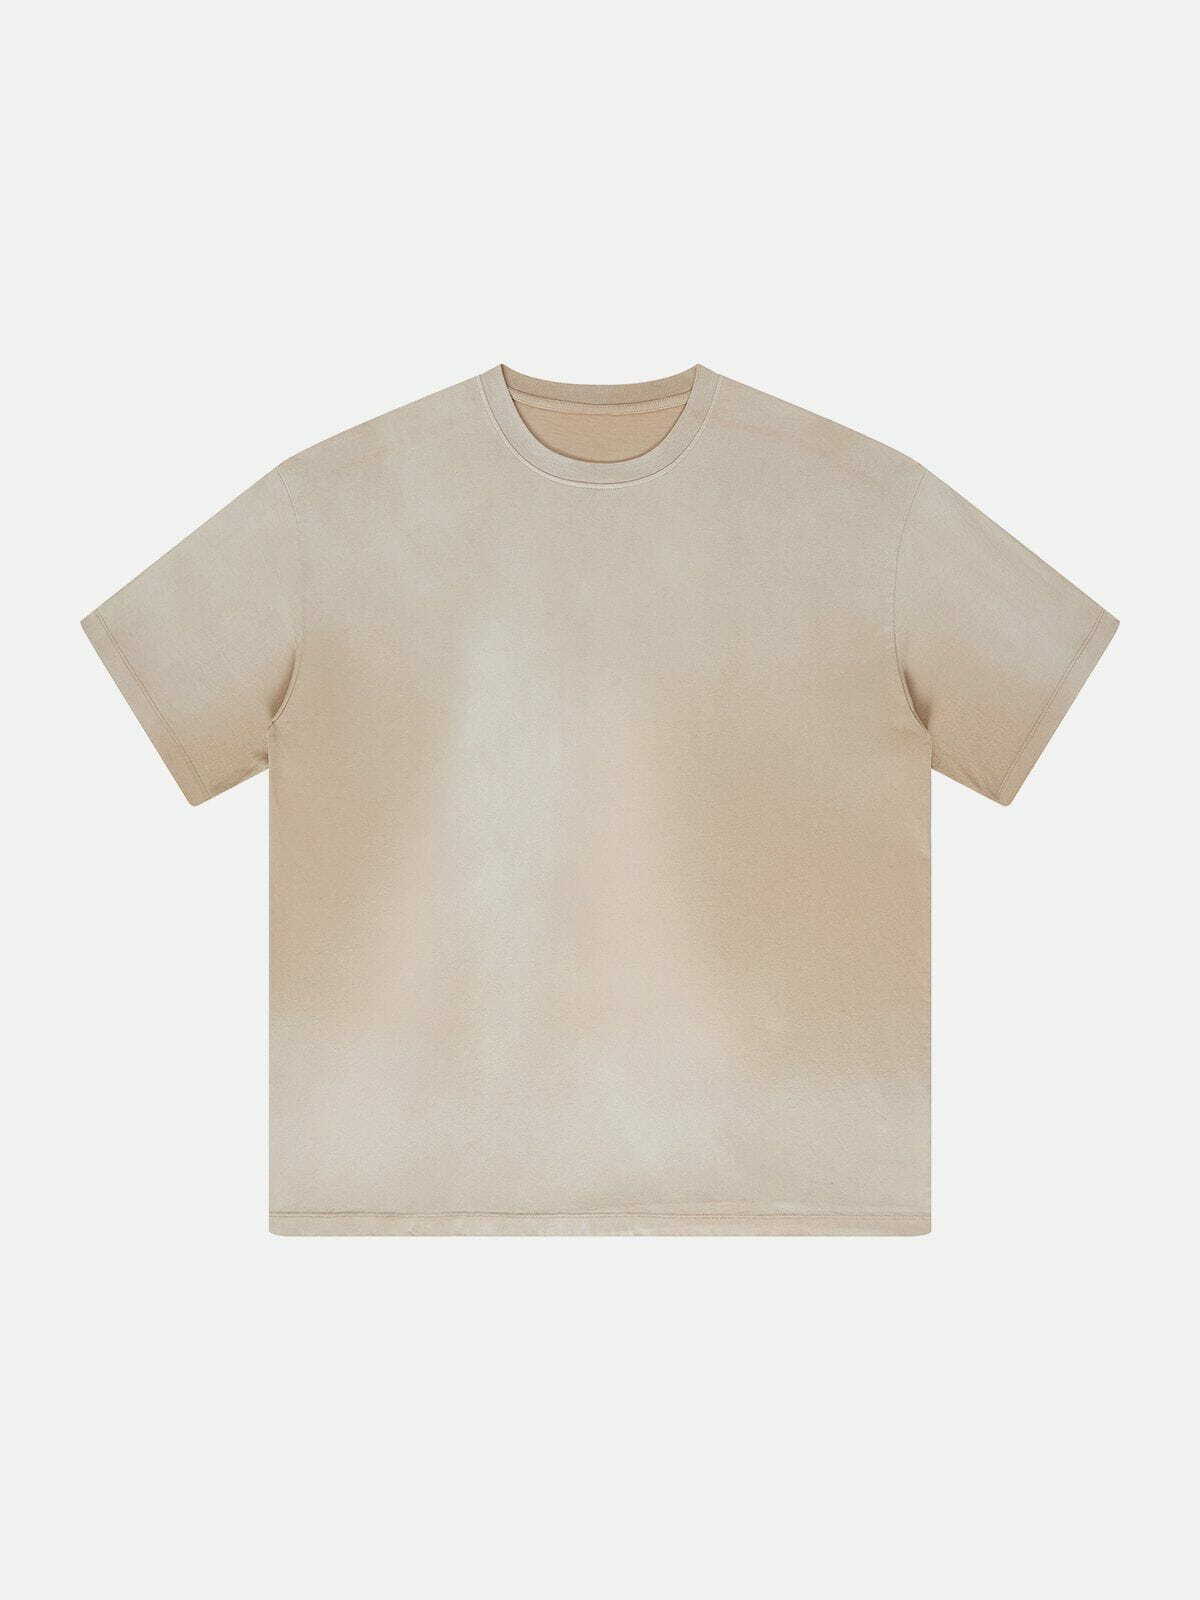 vibrant streetwear tee youthful  retro cotton shirt 8077